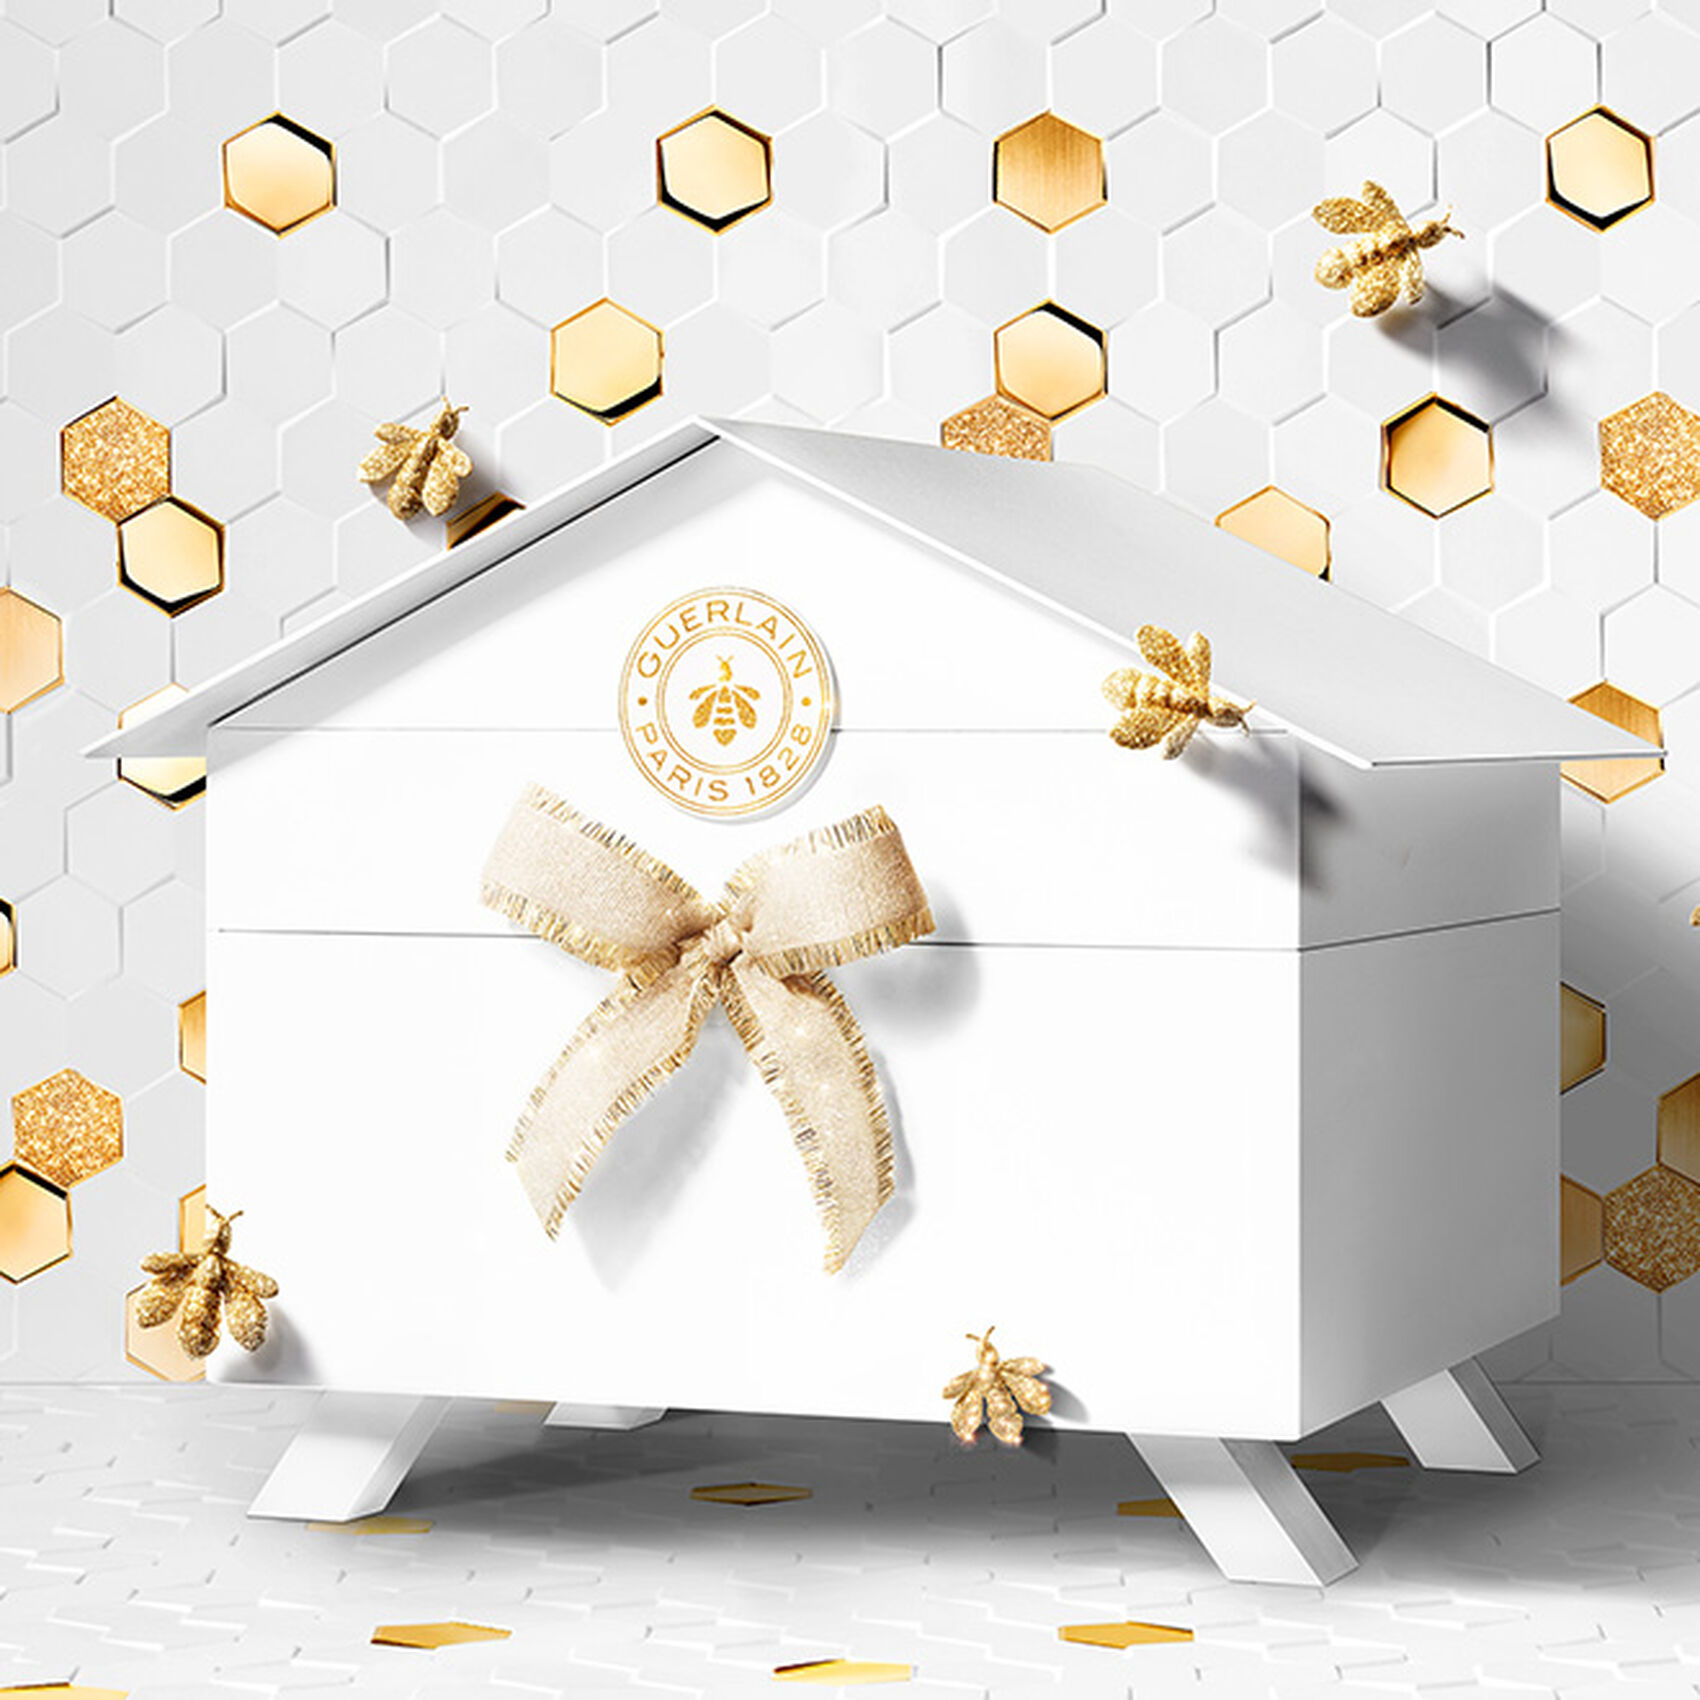 Guerlain Advent Calendar 2021 Hive of 25 Wonders + Full Spoilers